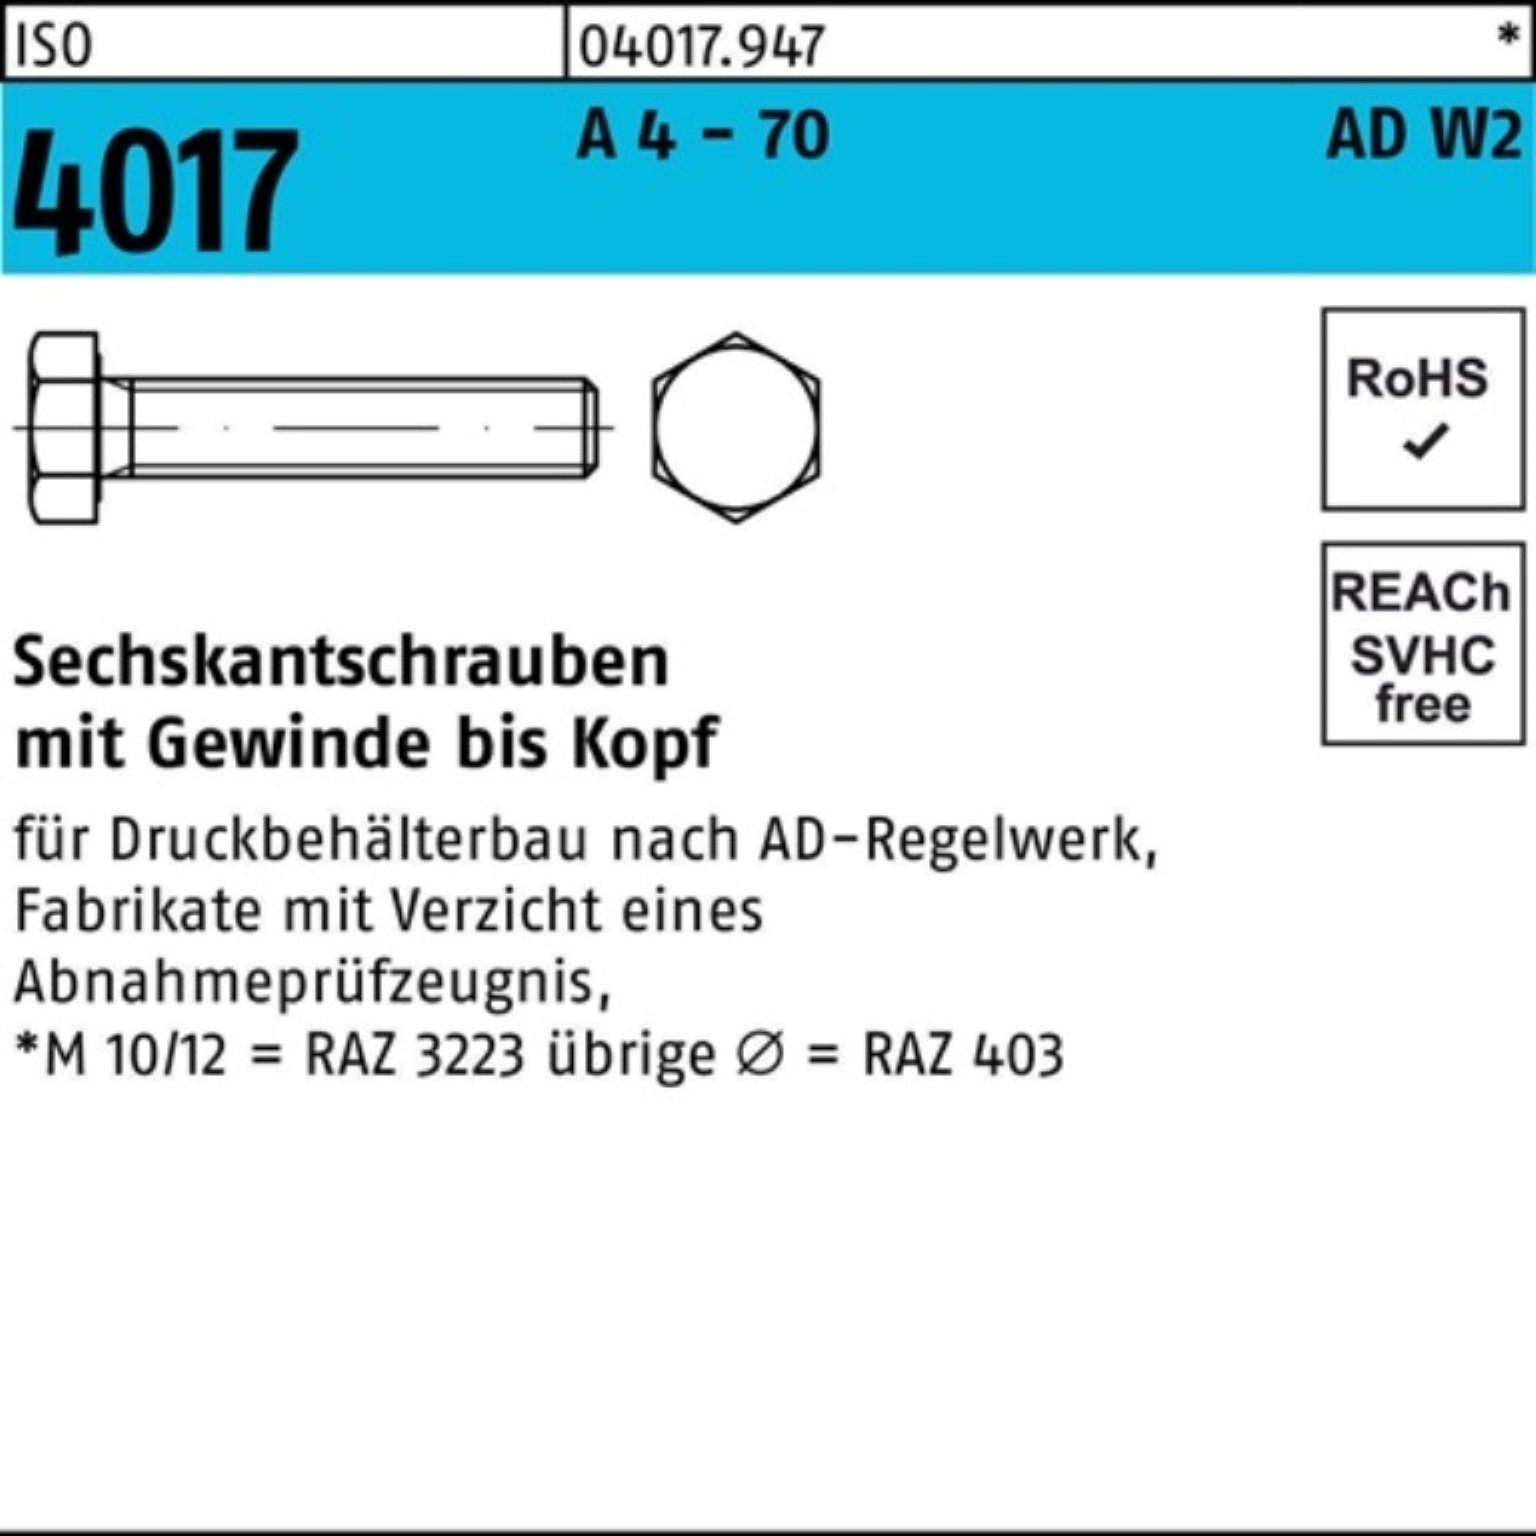 Bufab Sechskantschraube 100er 4017 M10x St 60 ISO 70 Sechskantschraube AD-W2 Pack VG 4 A - 100